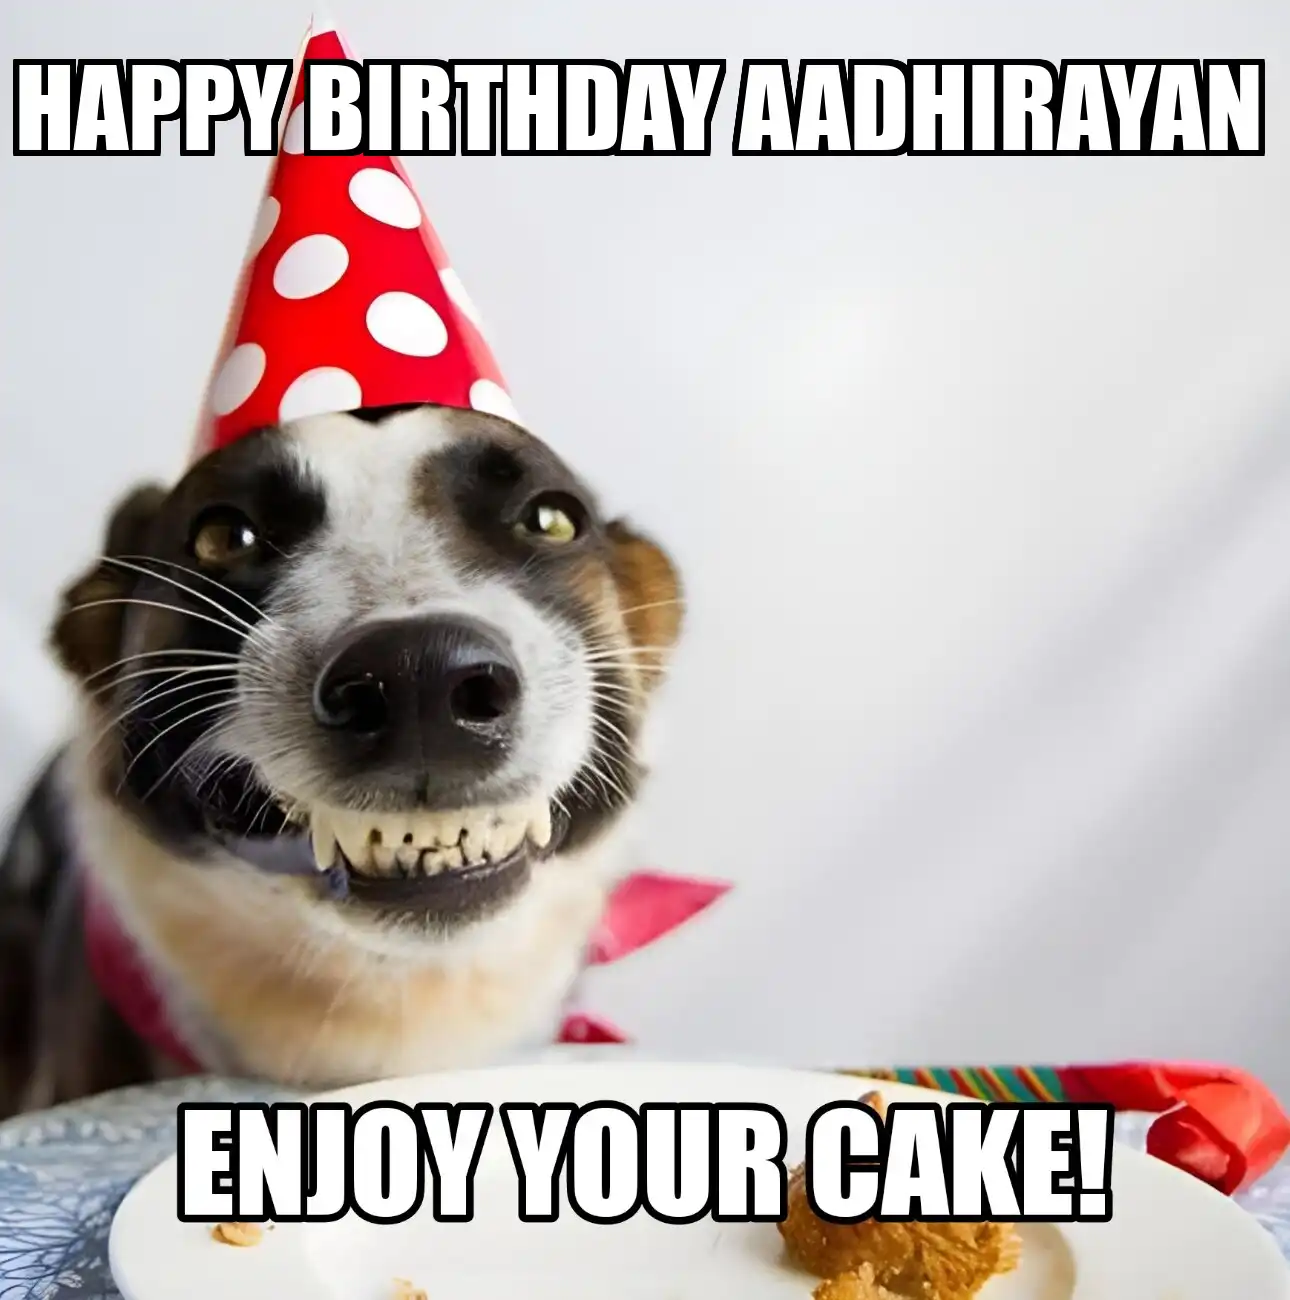 Happy Birthday Aadhirayan Enjoy Your Cake Dog Meme